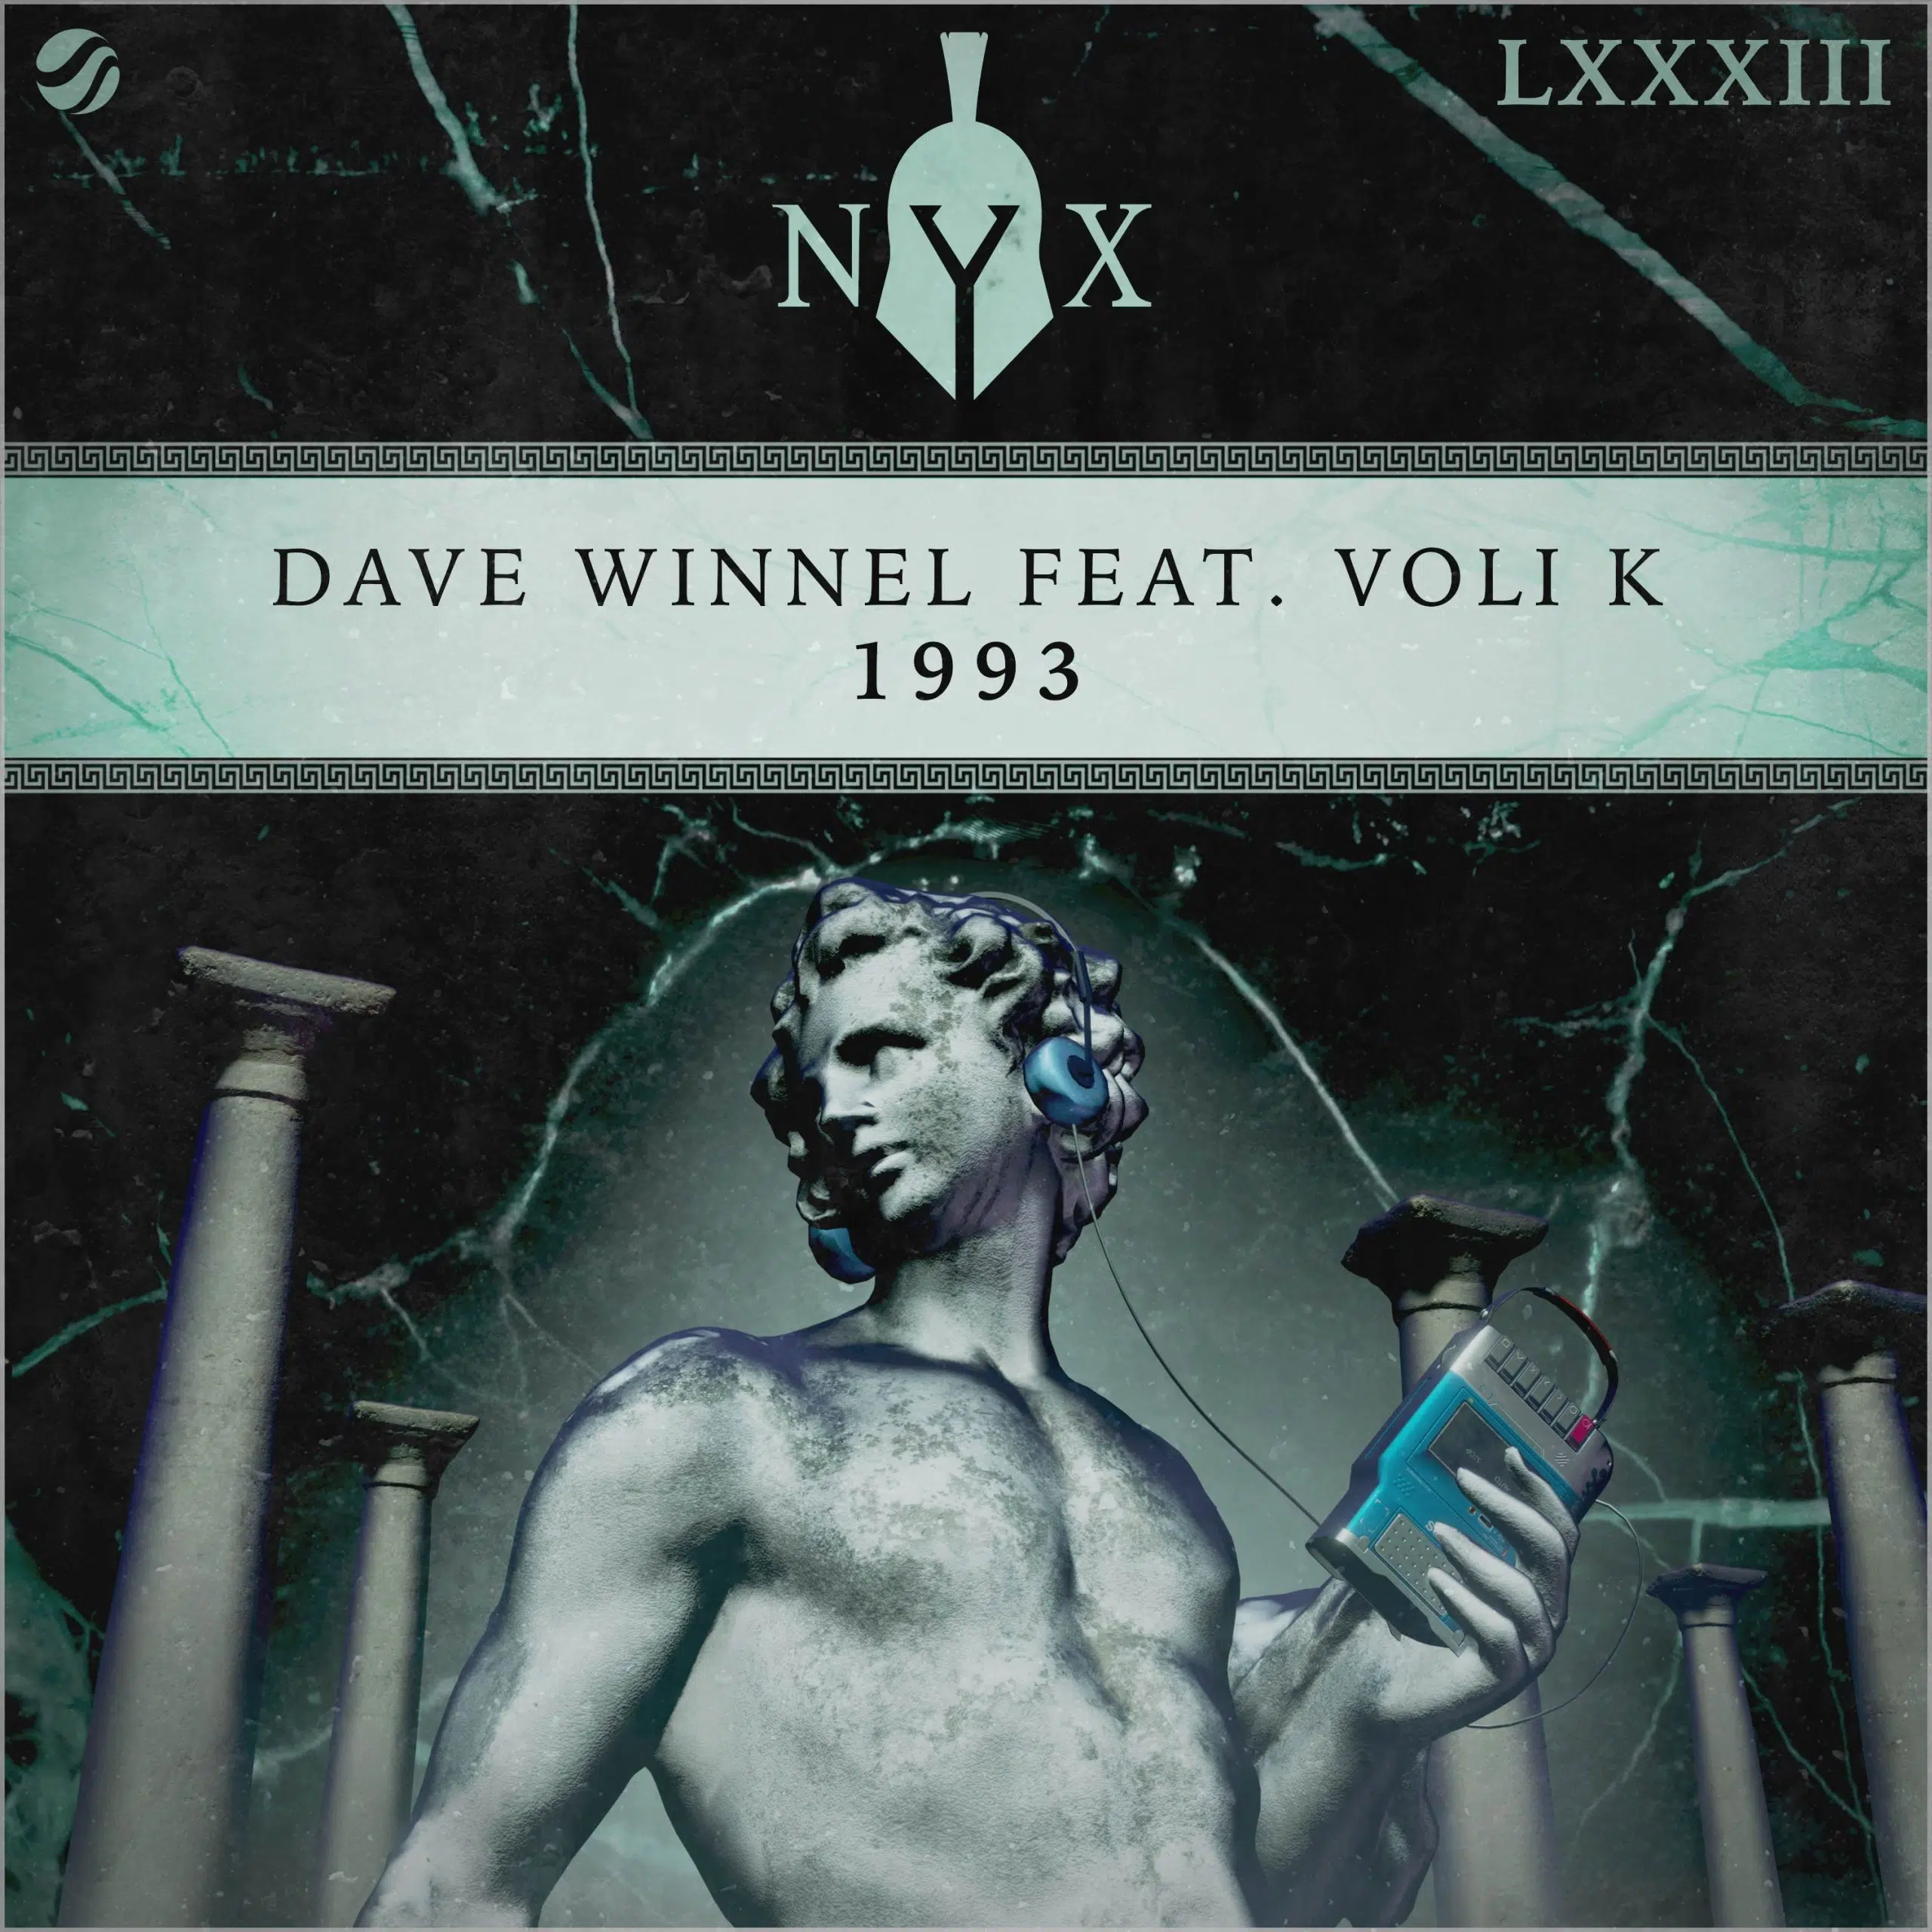 Dave Winnel “1993” feat. Voli K